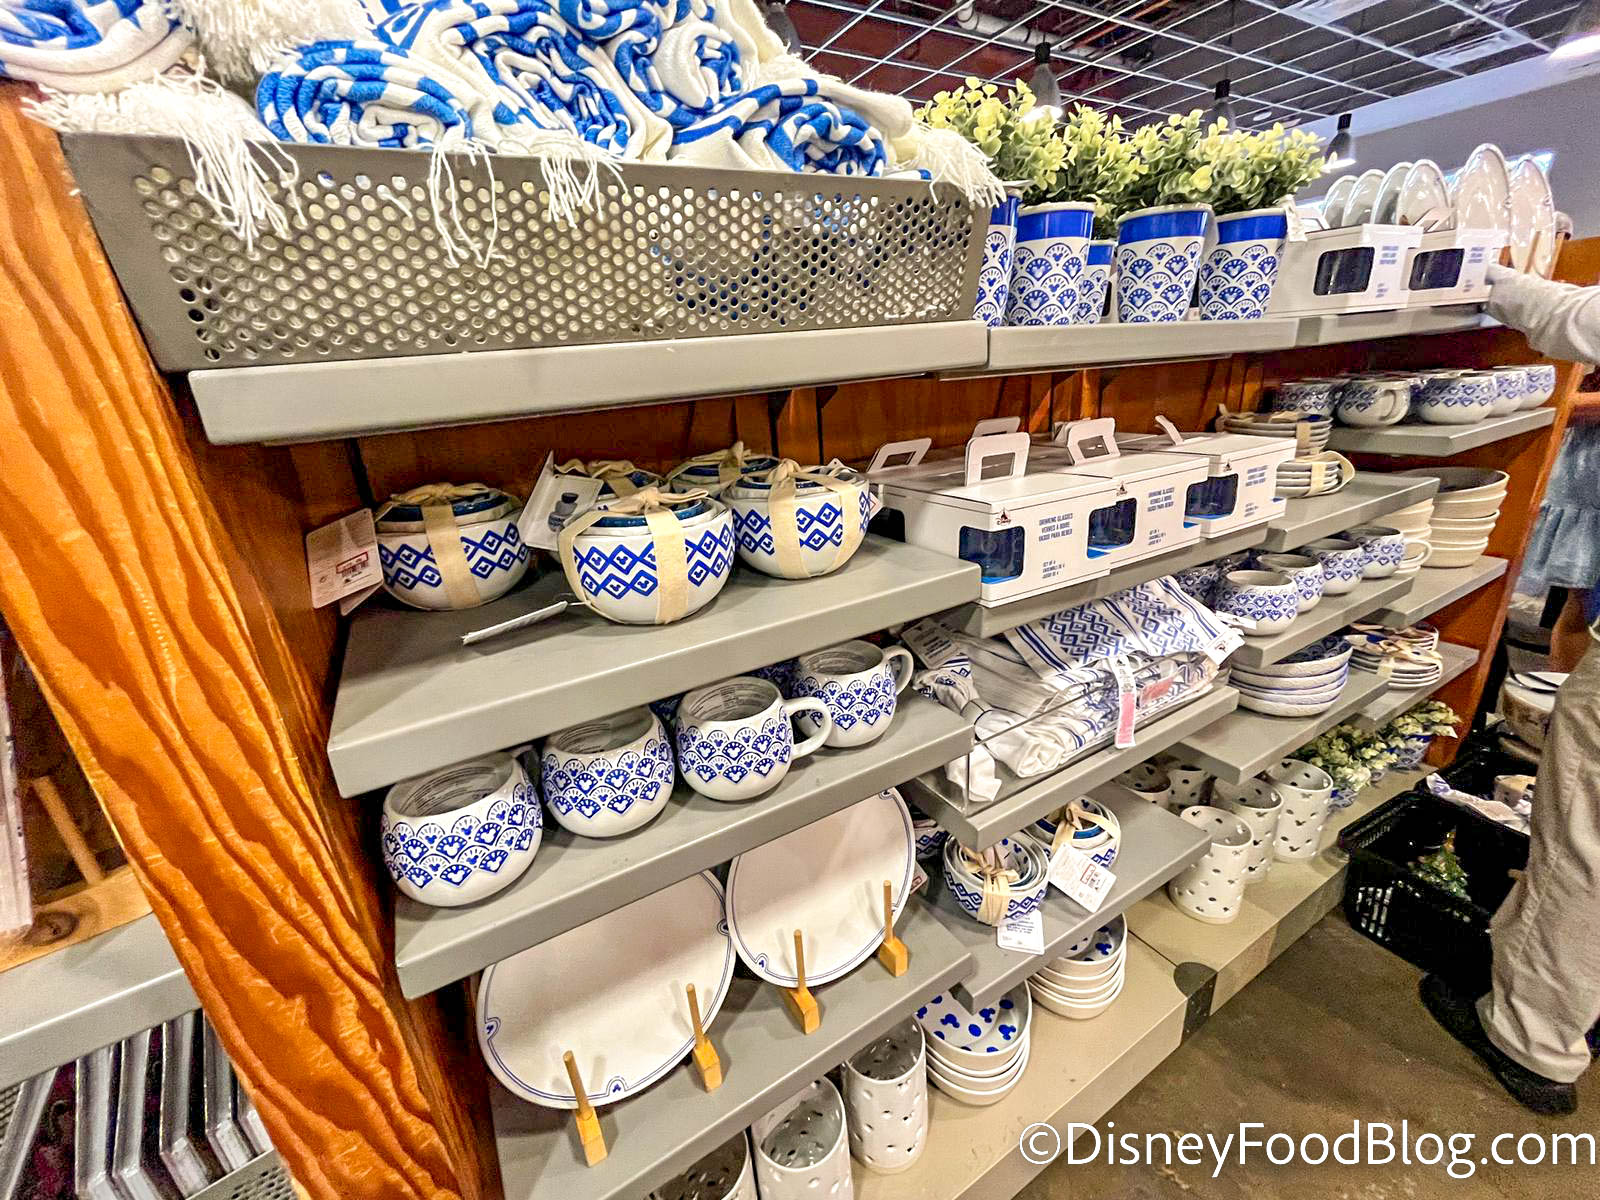 Disney Outlet Store Locations - Save on Official Disney Parks Souvenirs -  Gather Lemons